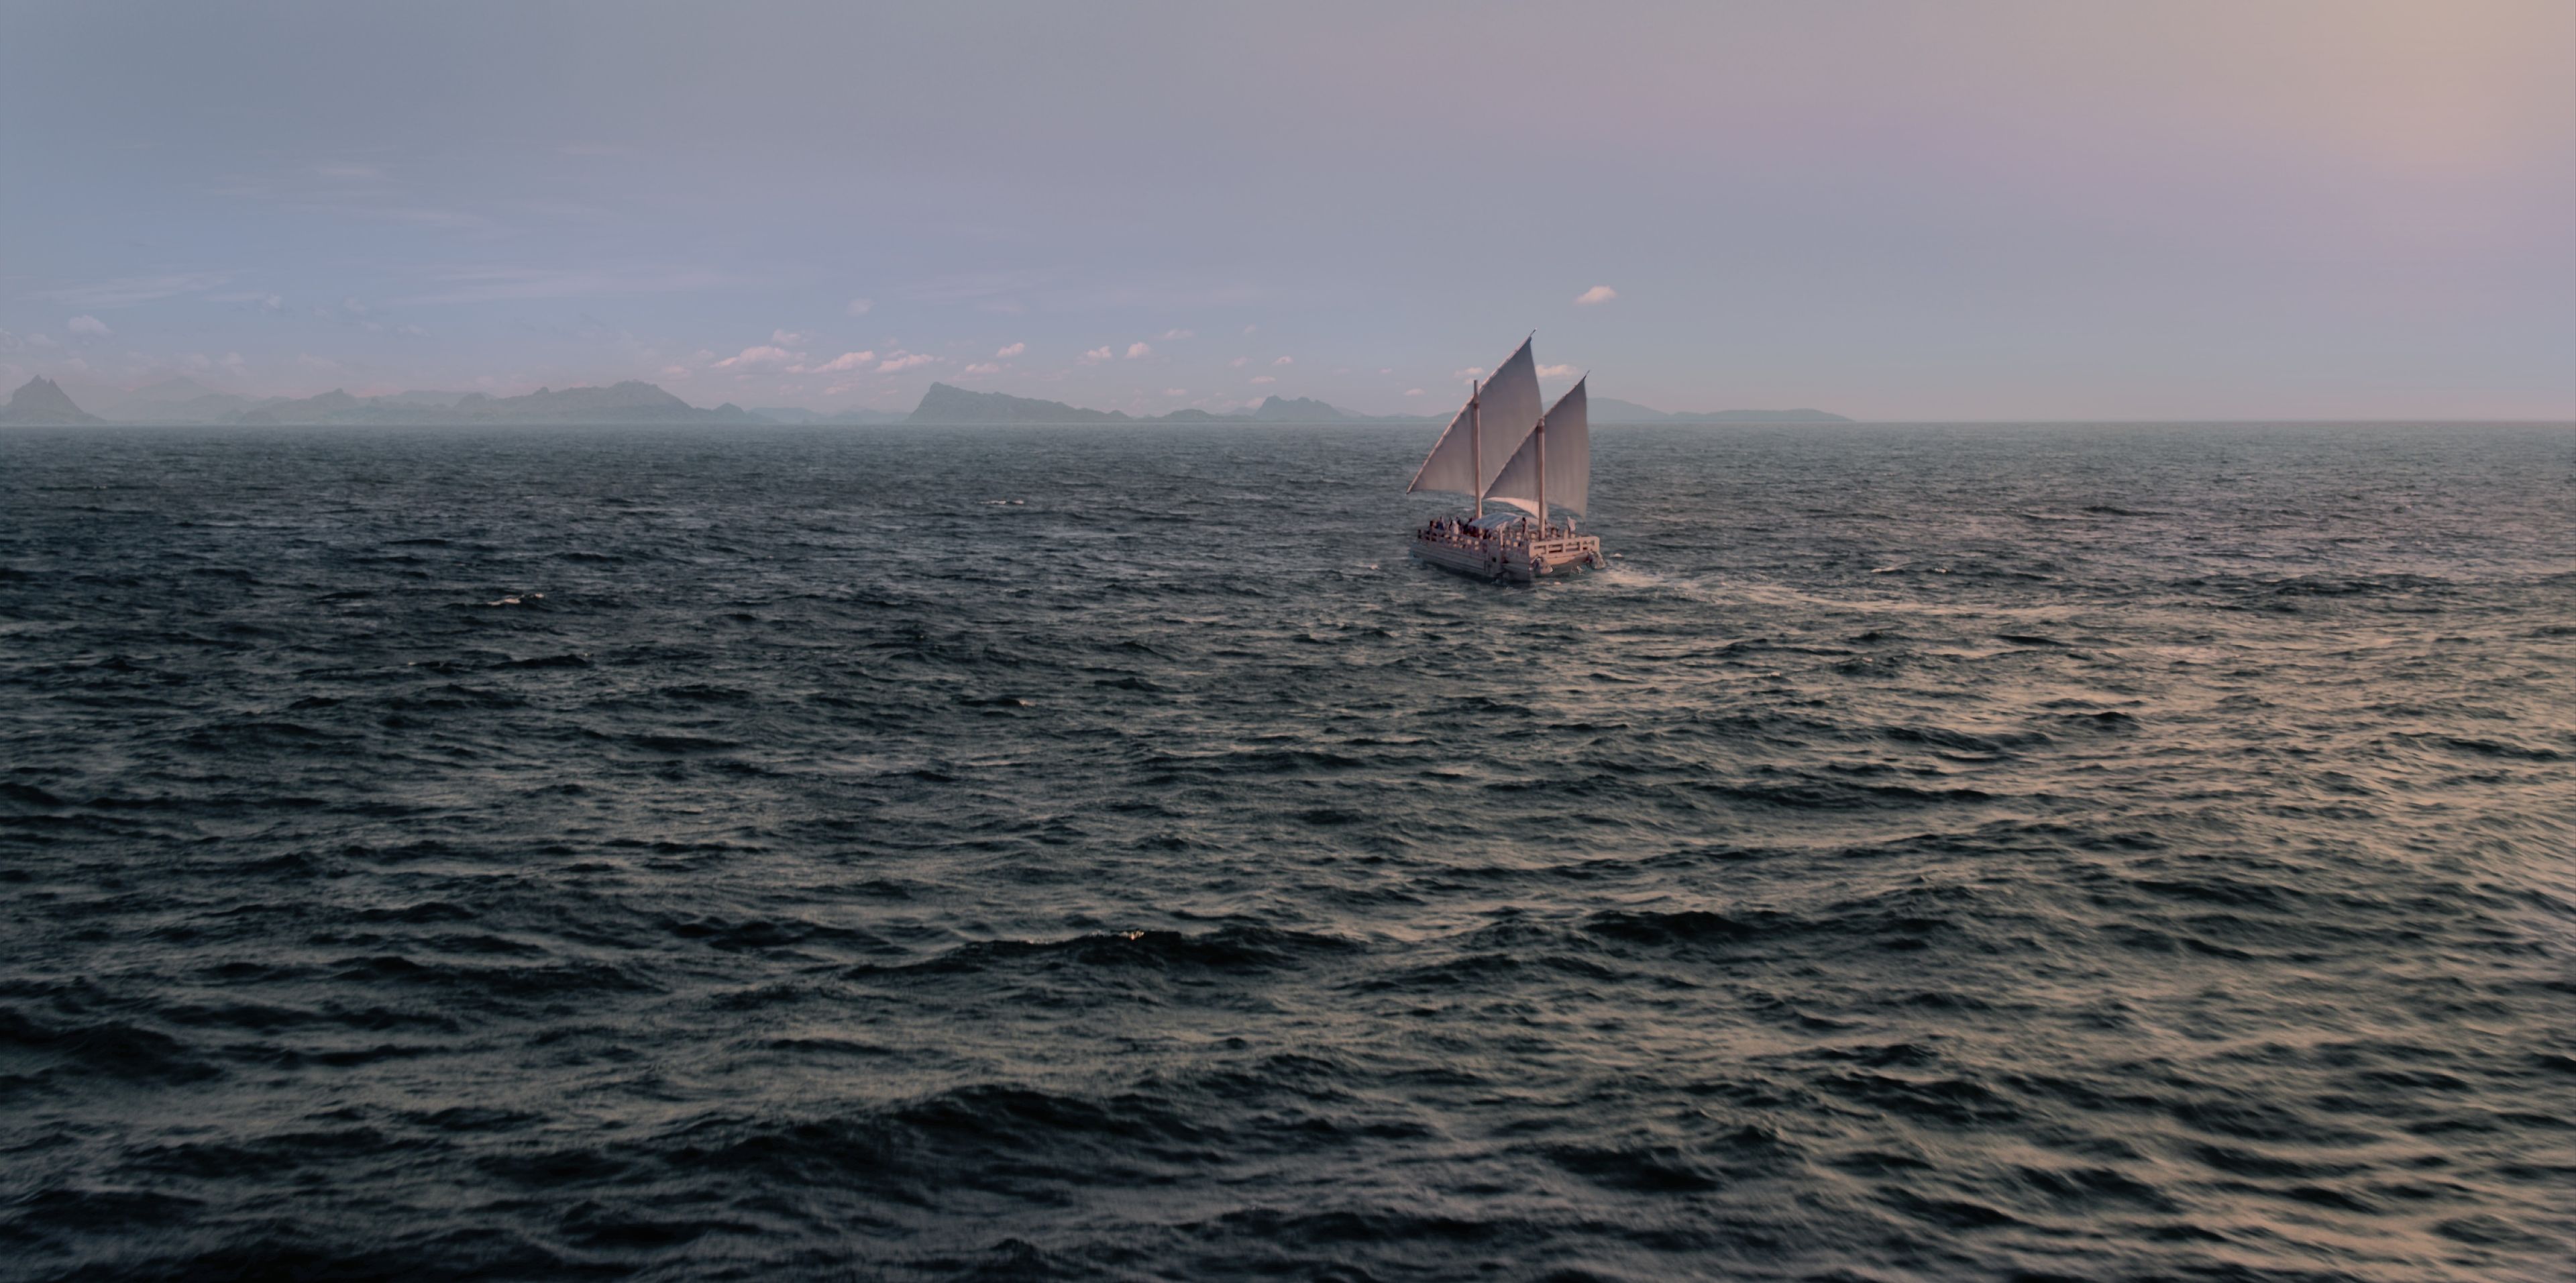 Lehi's family crosses the ocean in a ship.